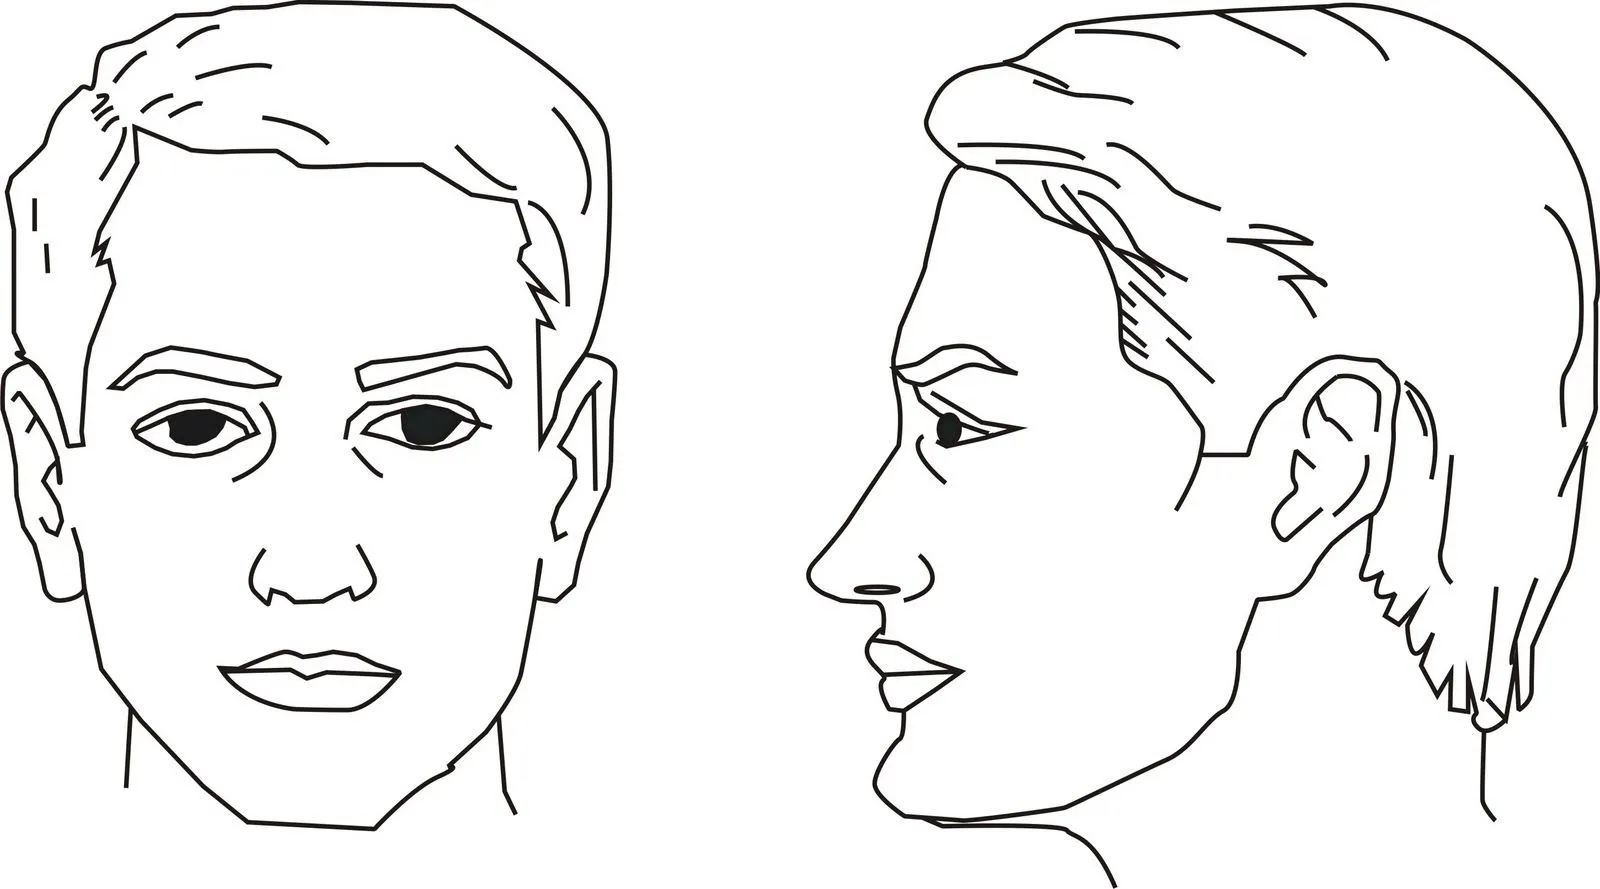 Caricaturas de rostros de hombres - Imagui